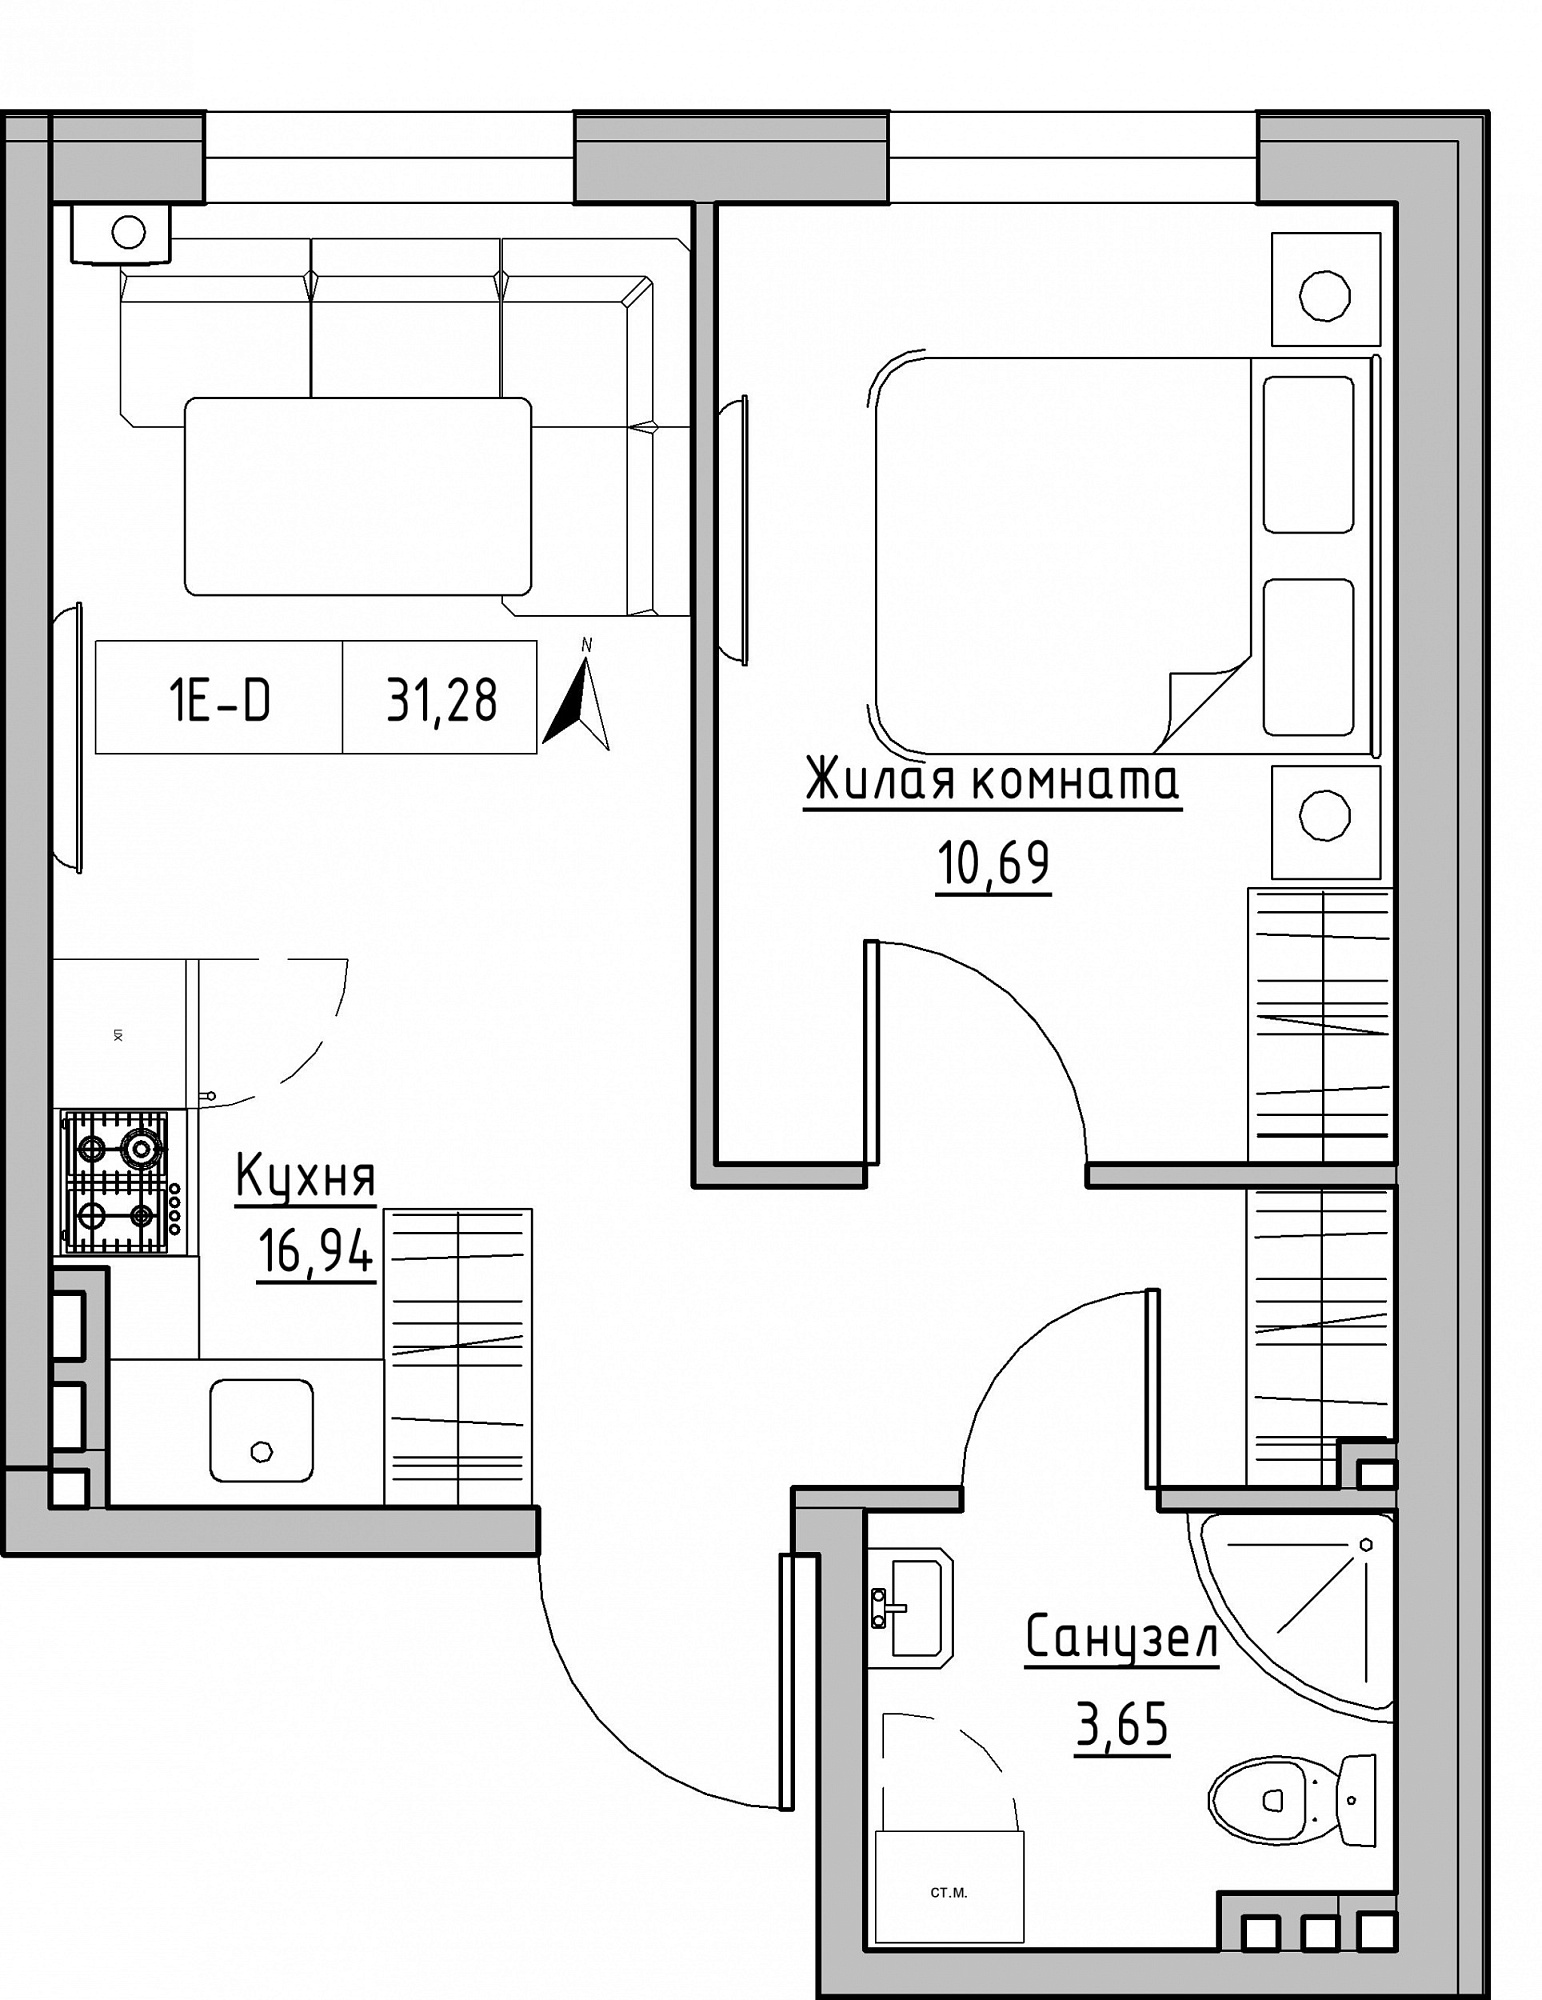 Planning 1-rm flats area 31.28m2, KS-024-02/0002.